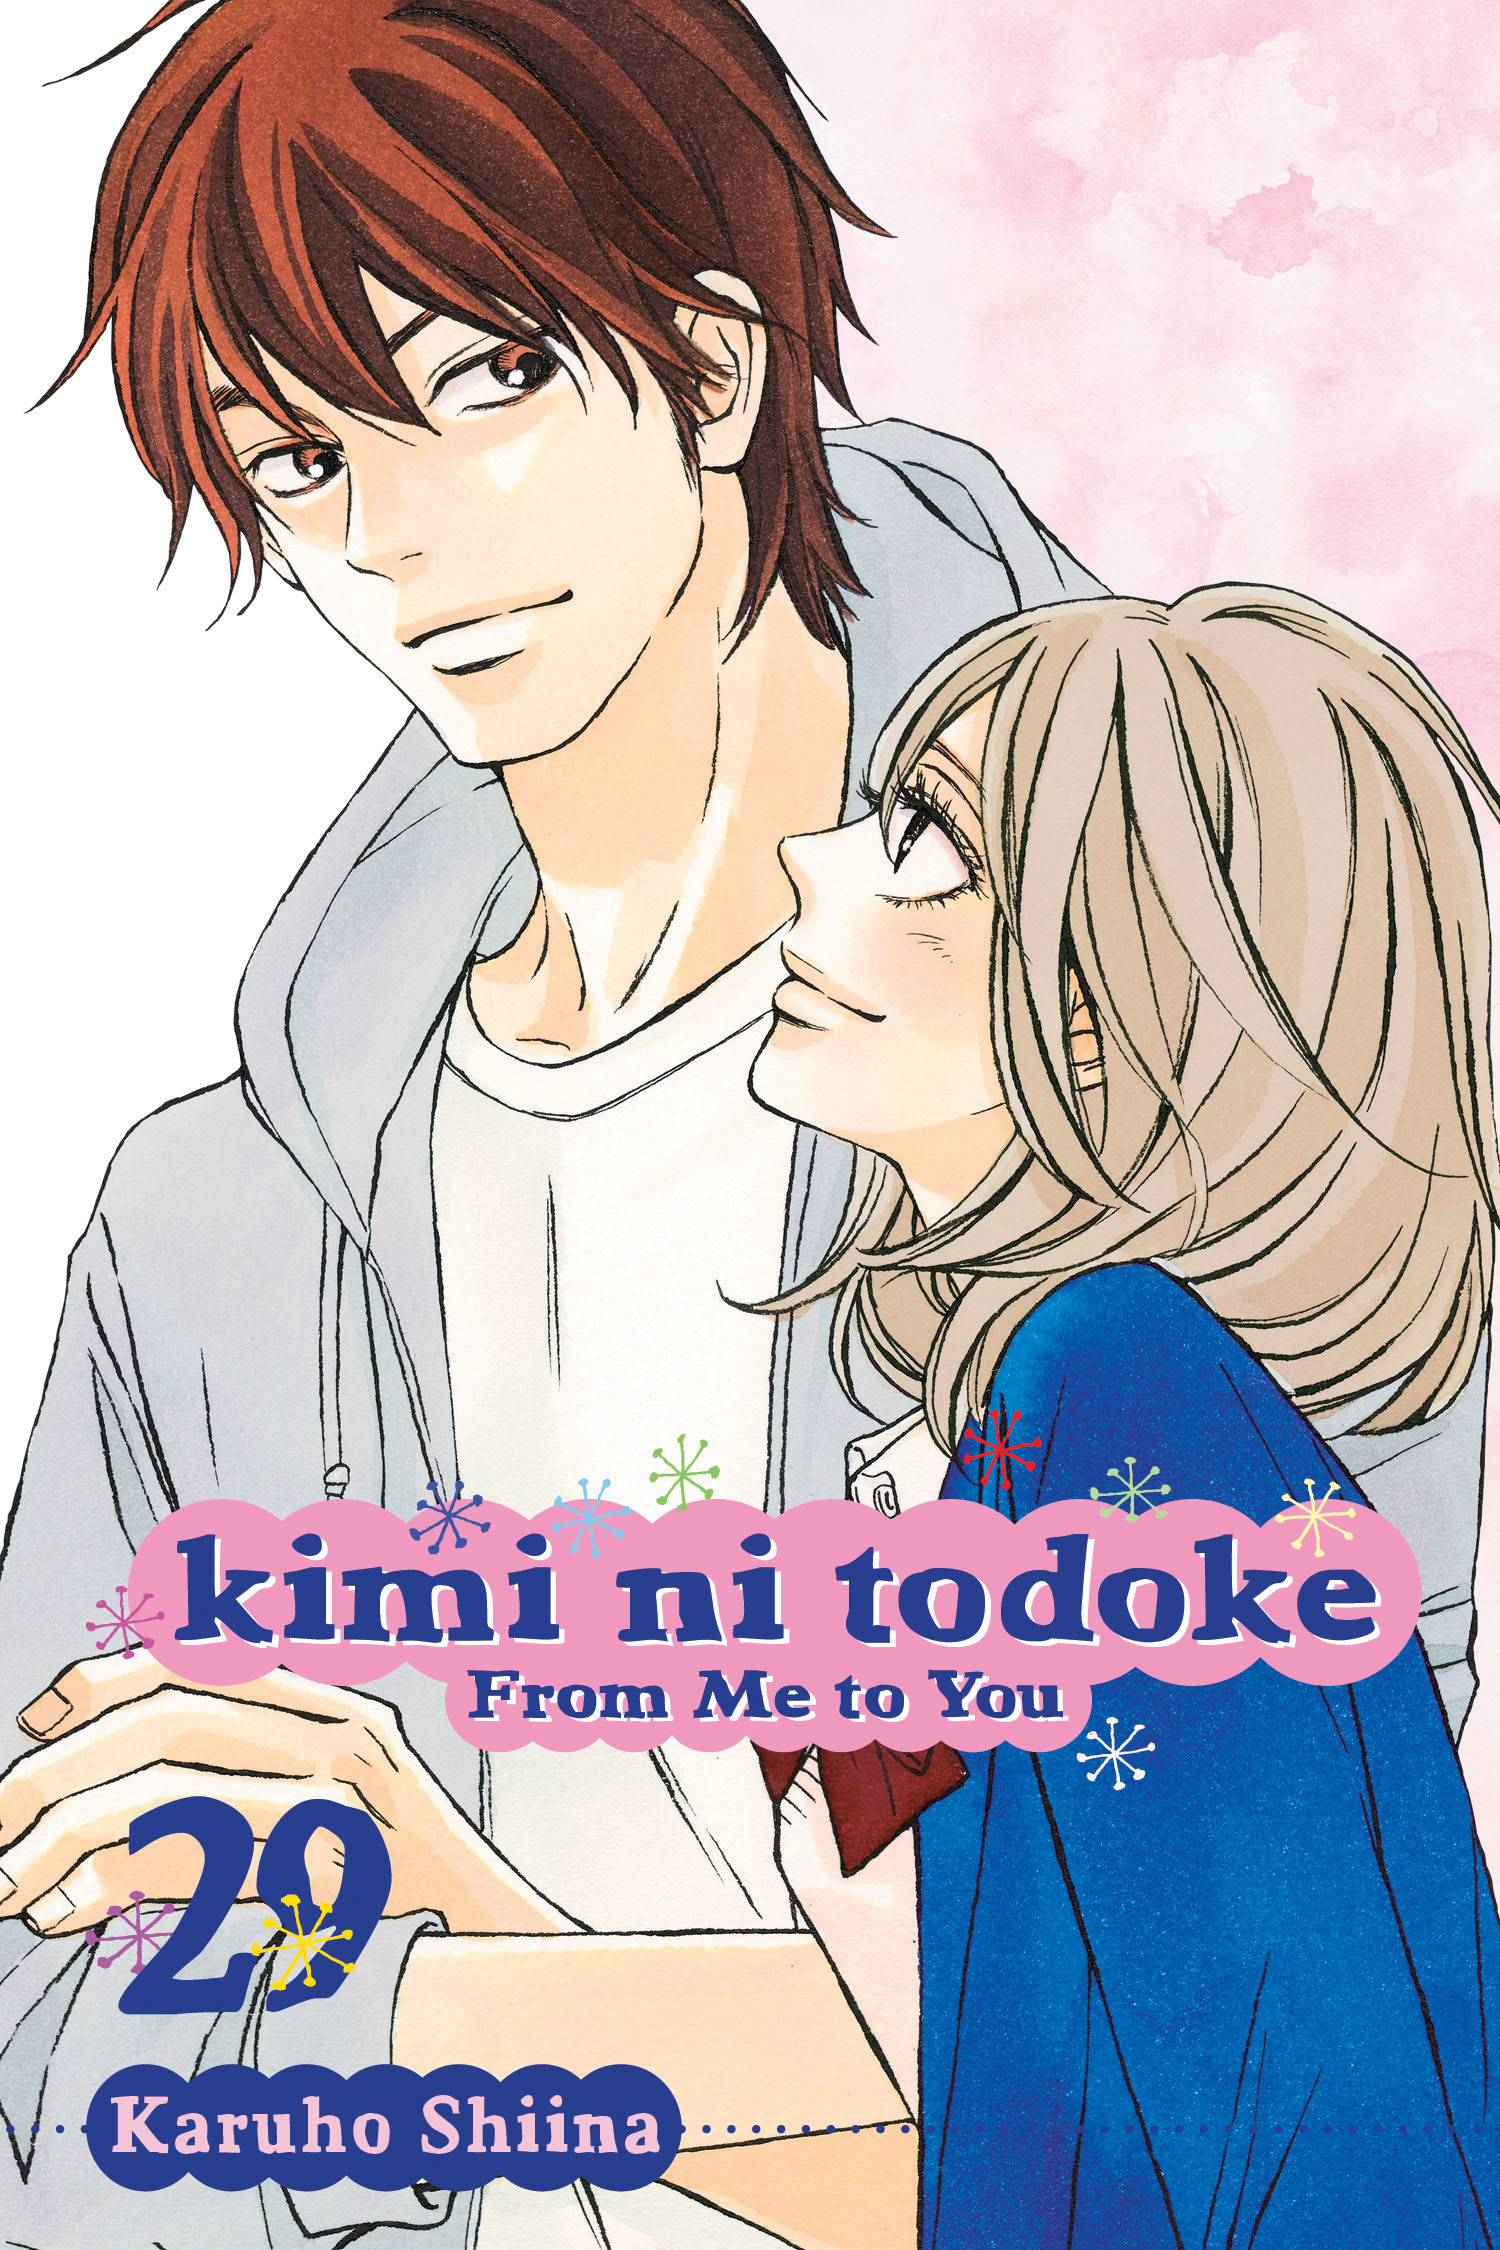 Kimi ni Todoke Manga Volume 29 | Kimi ni Todoke Wiki | Fandom